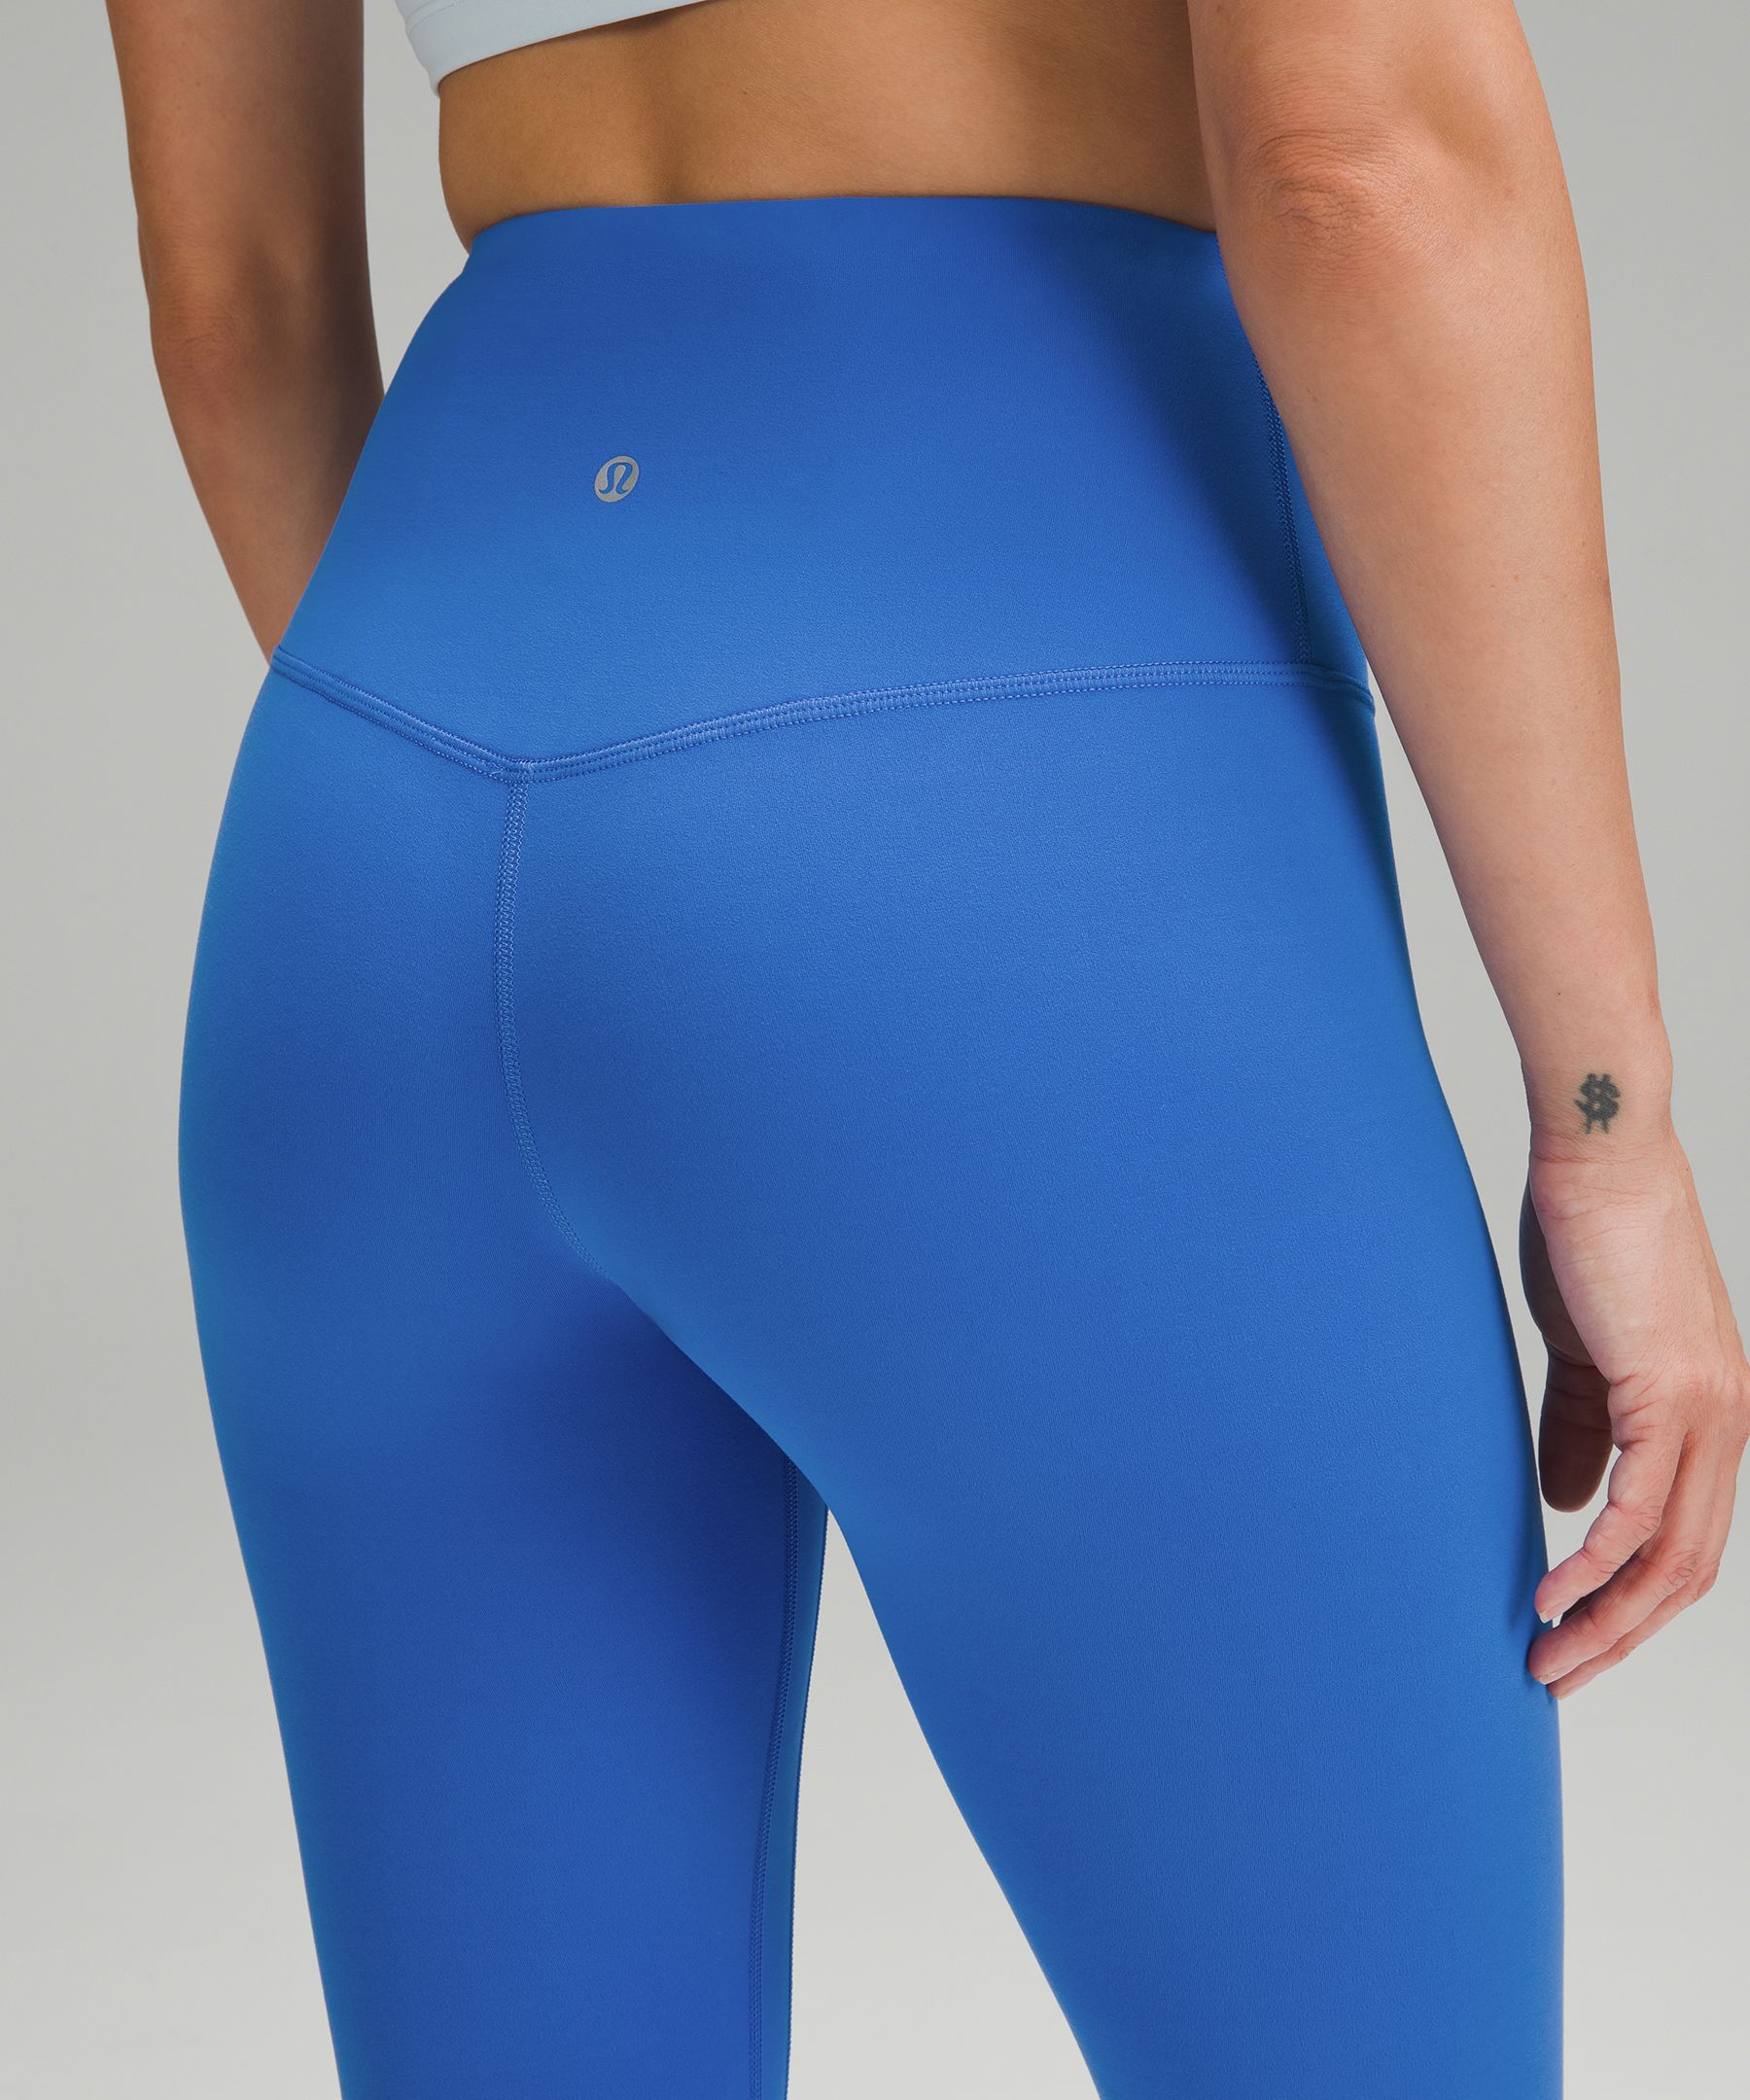 Lululemon Athletica Blue Active Pants Size 4 - 55% off